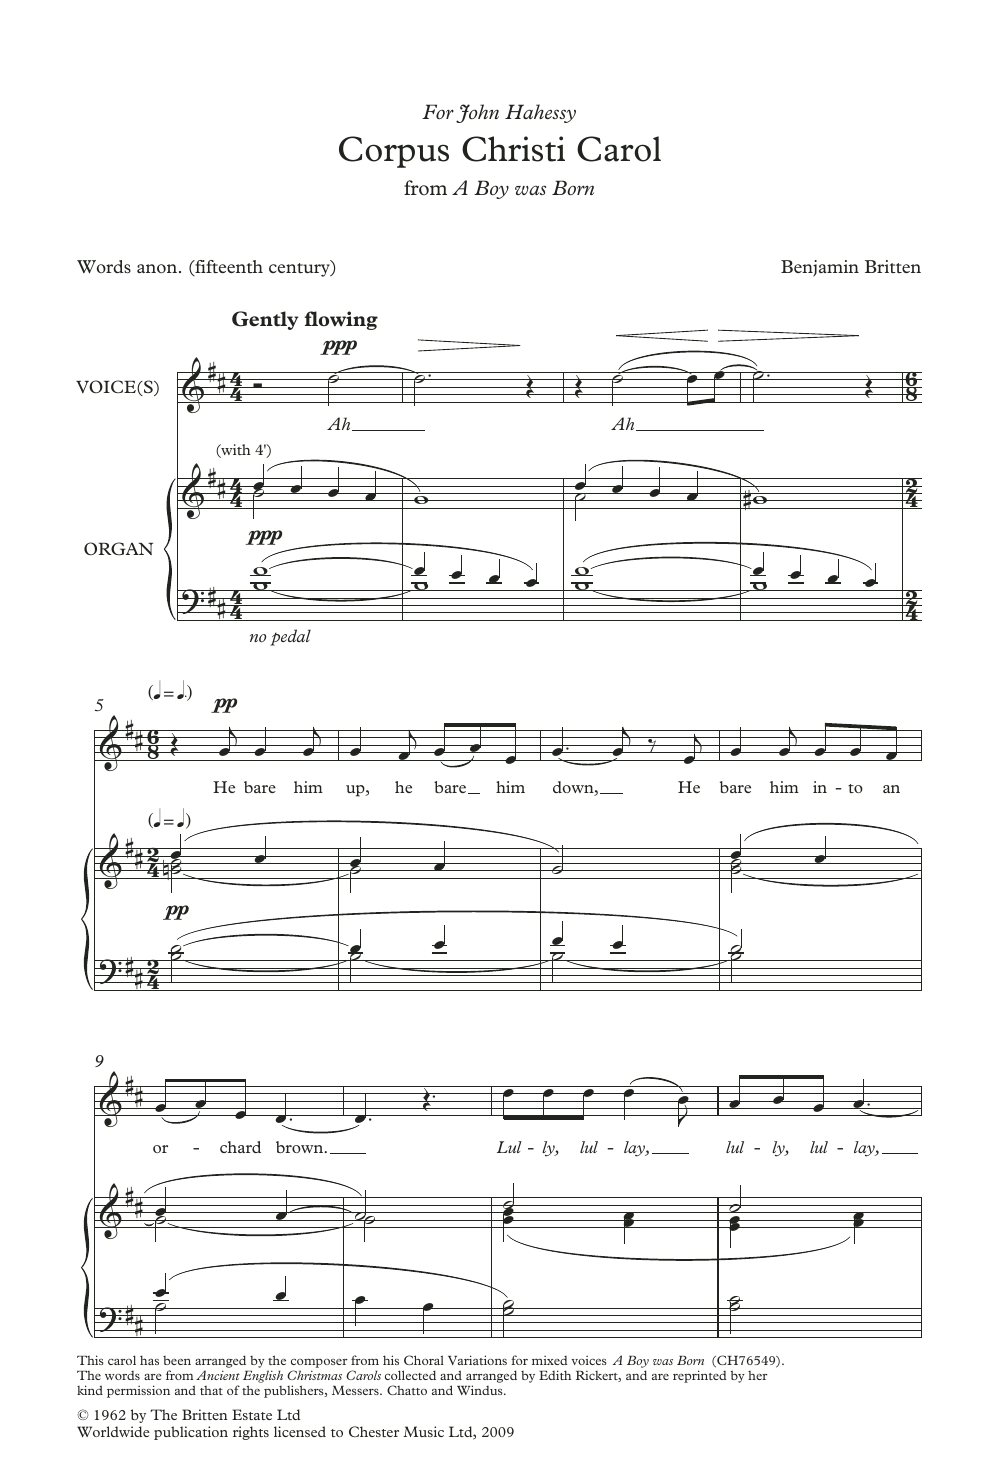 Benjamin Britten Corpus Christi Carol (from A Boy Was Born) Sheet Music Notes & Chords for Choir - Download or Print PDF